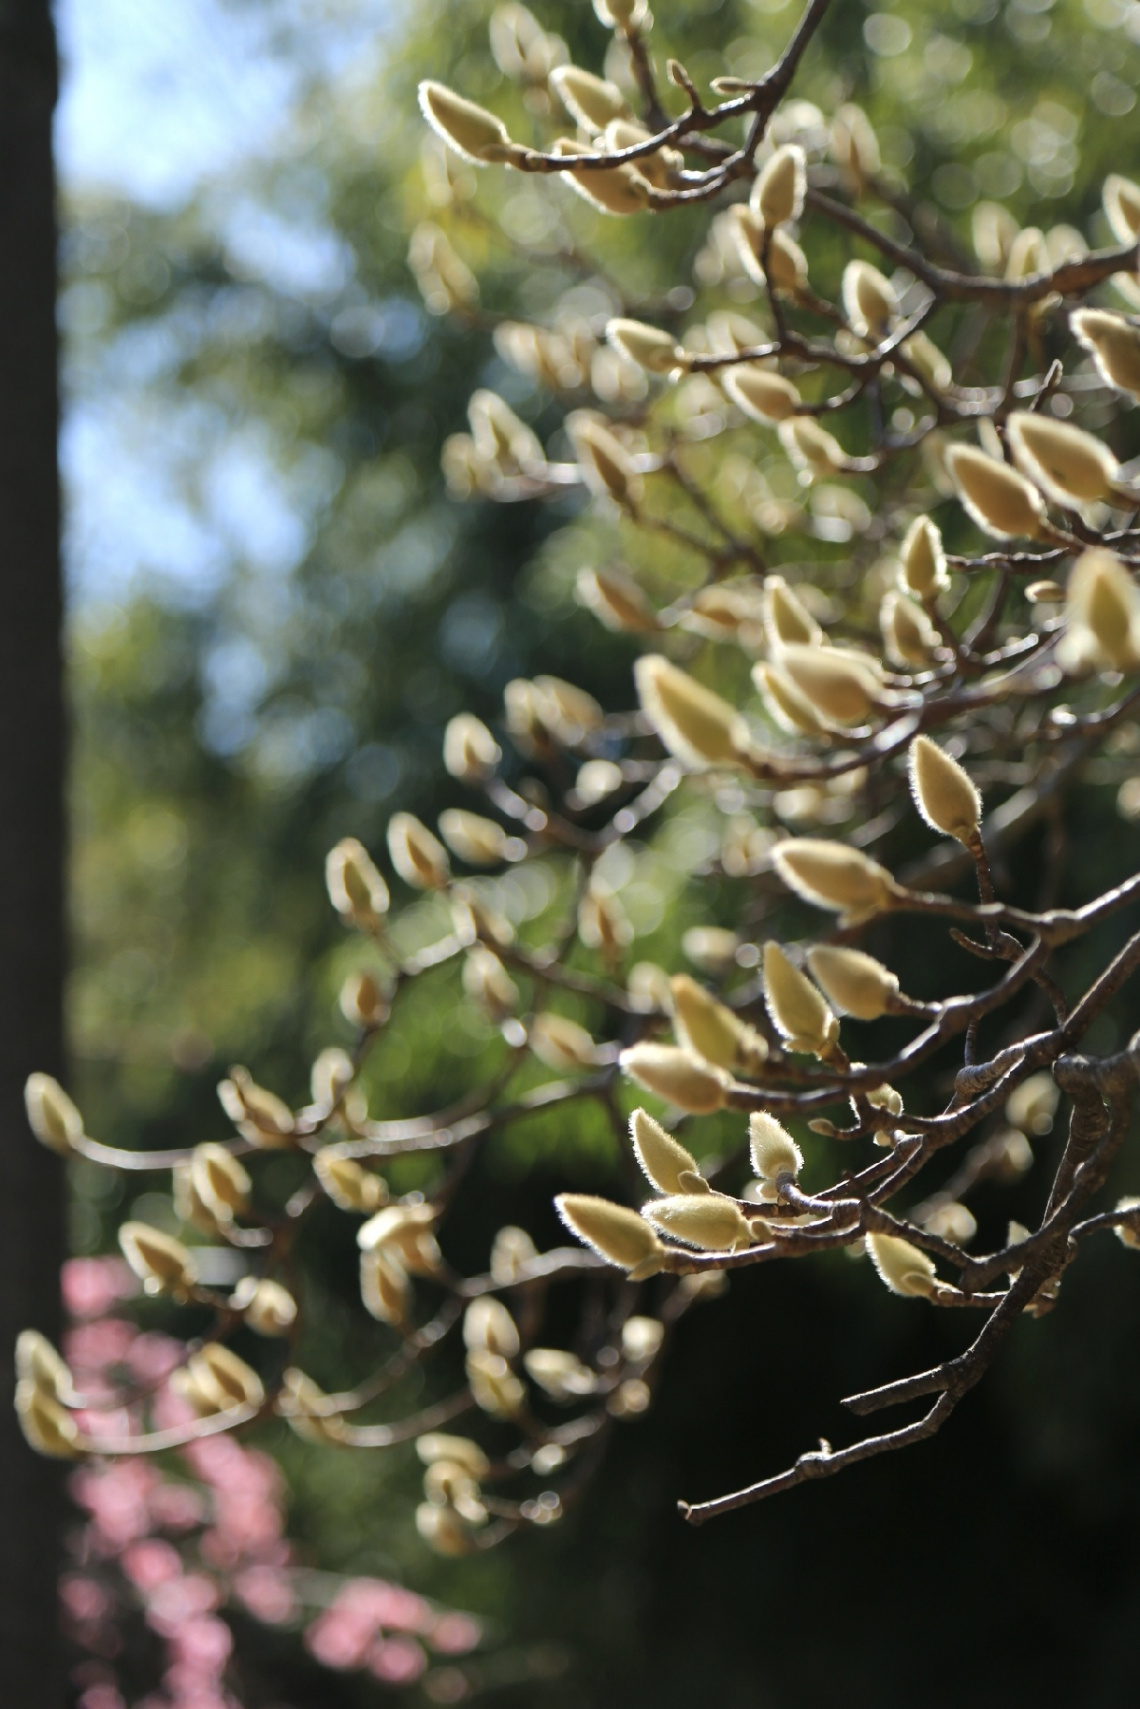 Magnolia buds